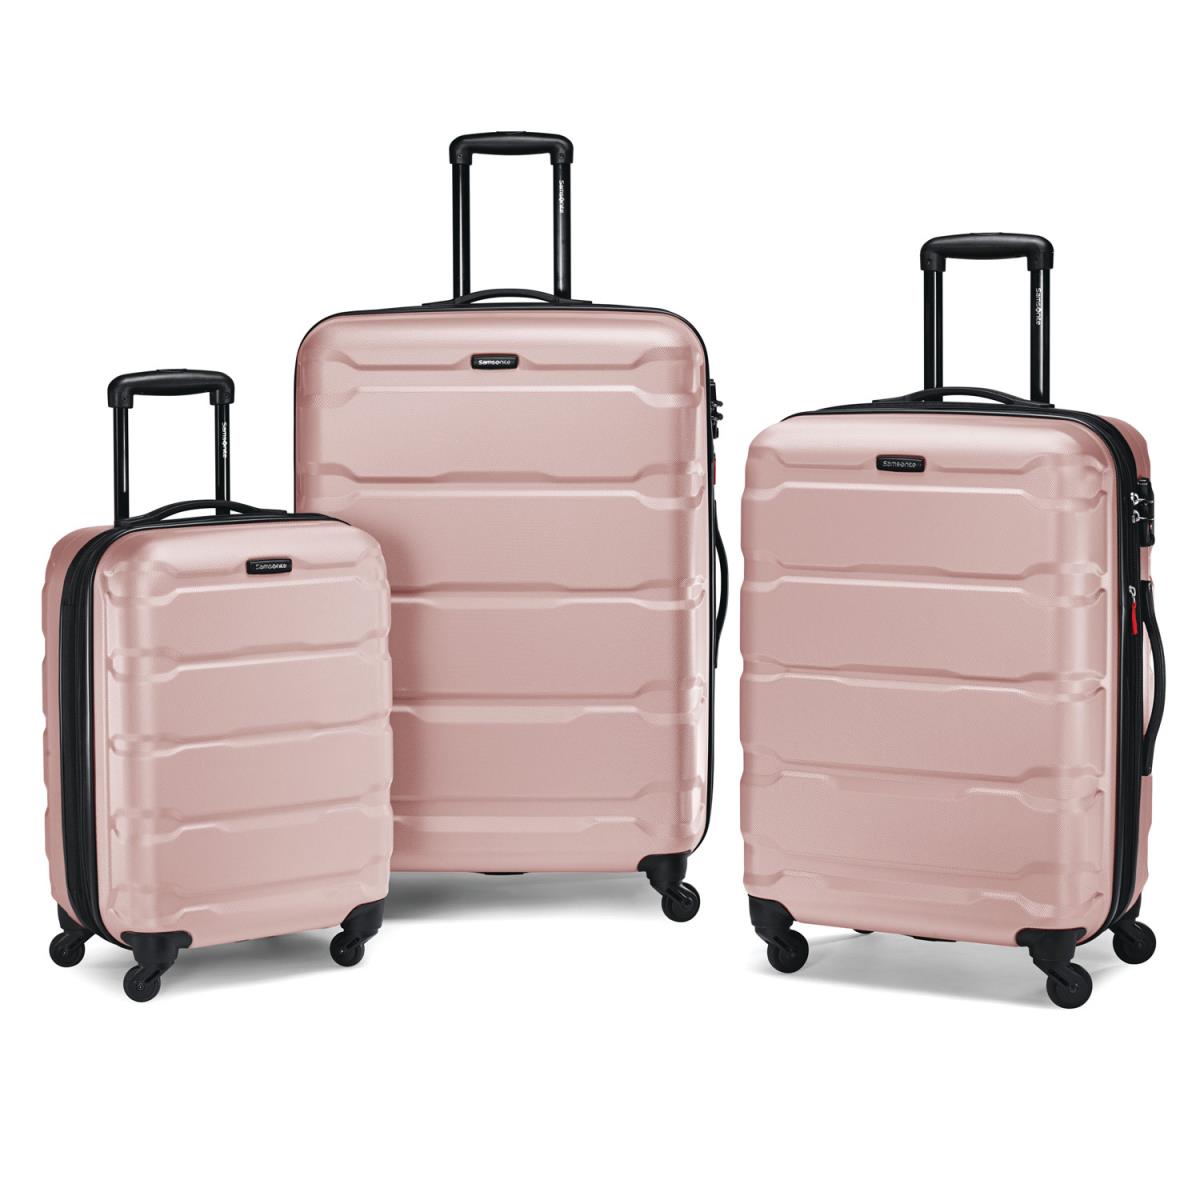 Samsonite Omni Hardside Spinner Suitcase Luggage Pink Rose - 20 / 24 / 28 3-Piece Set (68311-1174)